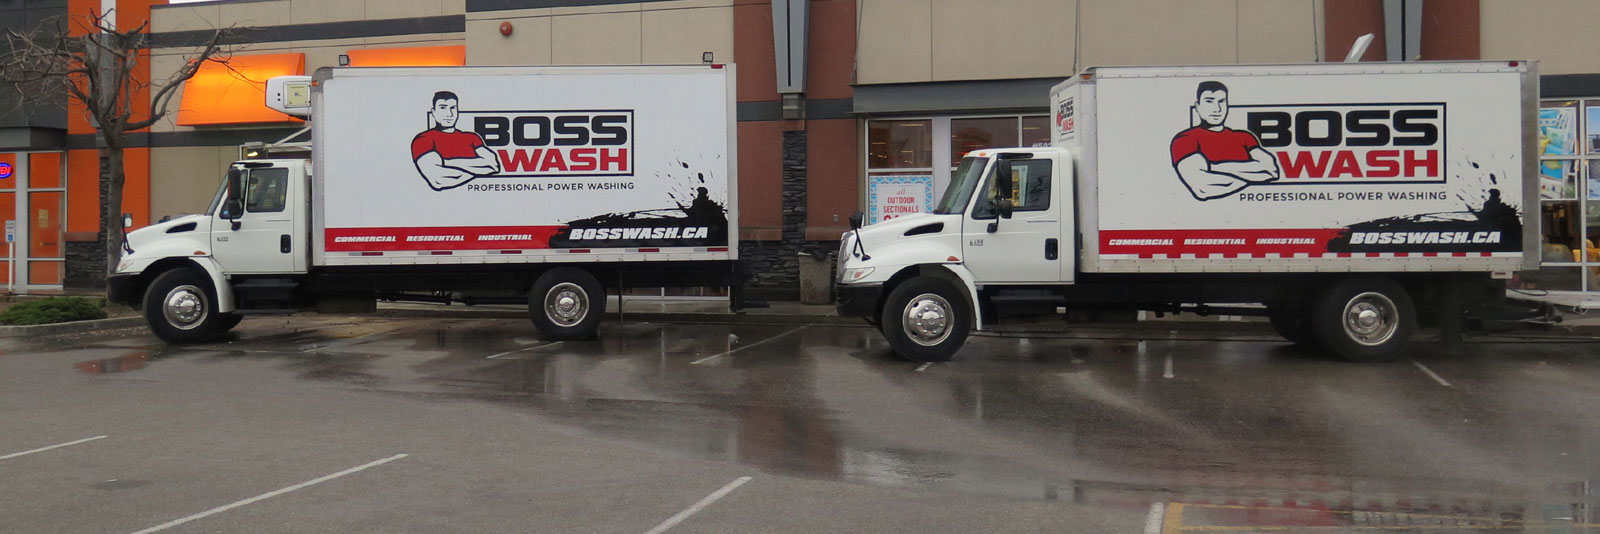 BOSSWASH team of professional power washers